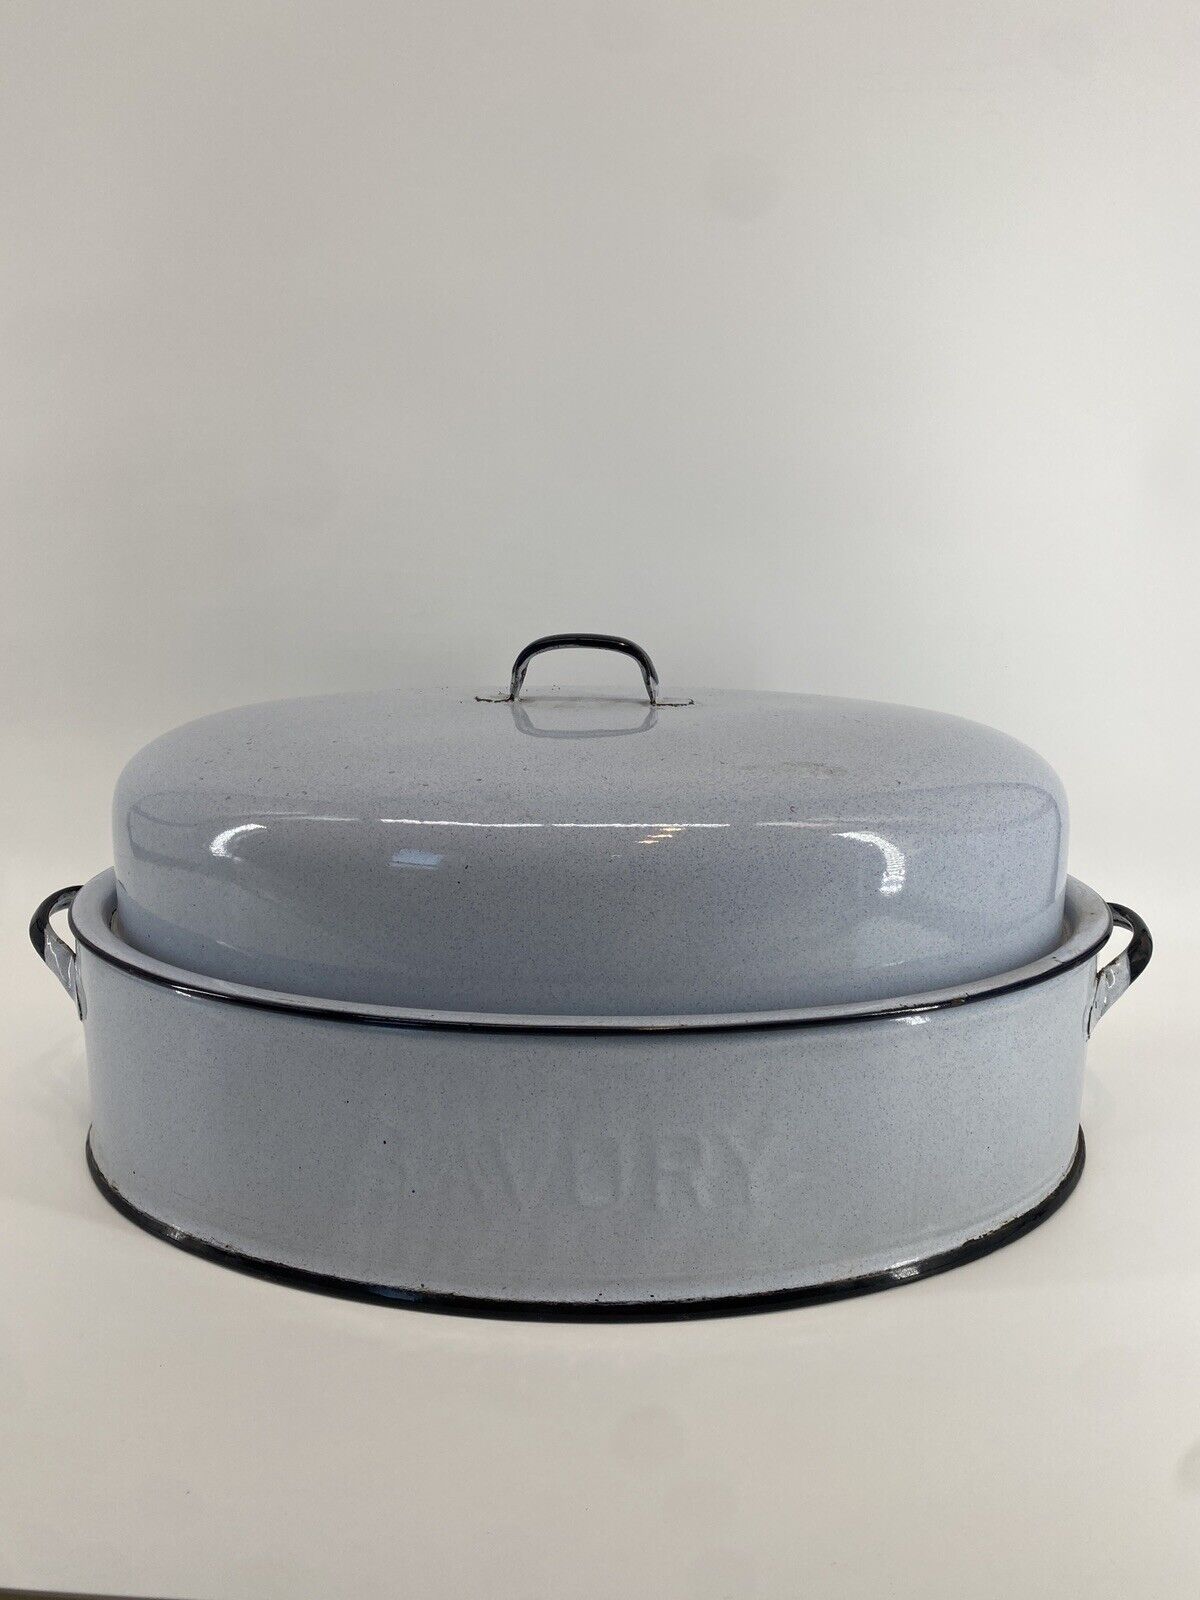 Vintage Savory Blue Speckled Enamel Roaster Pan with Lid